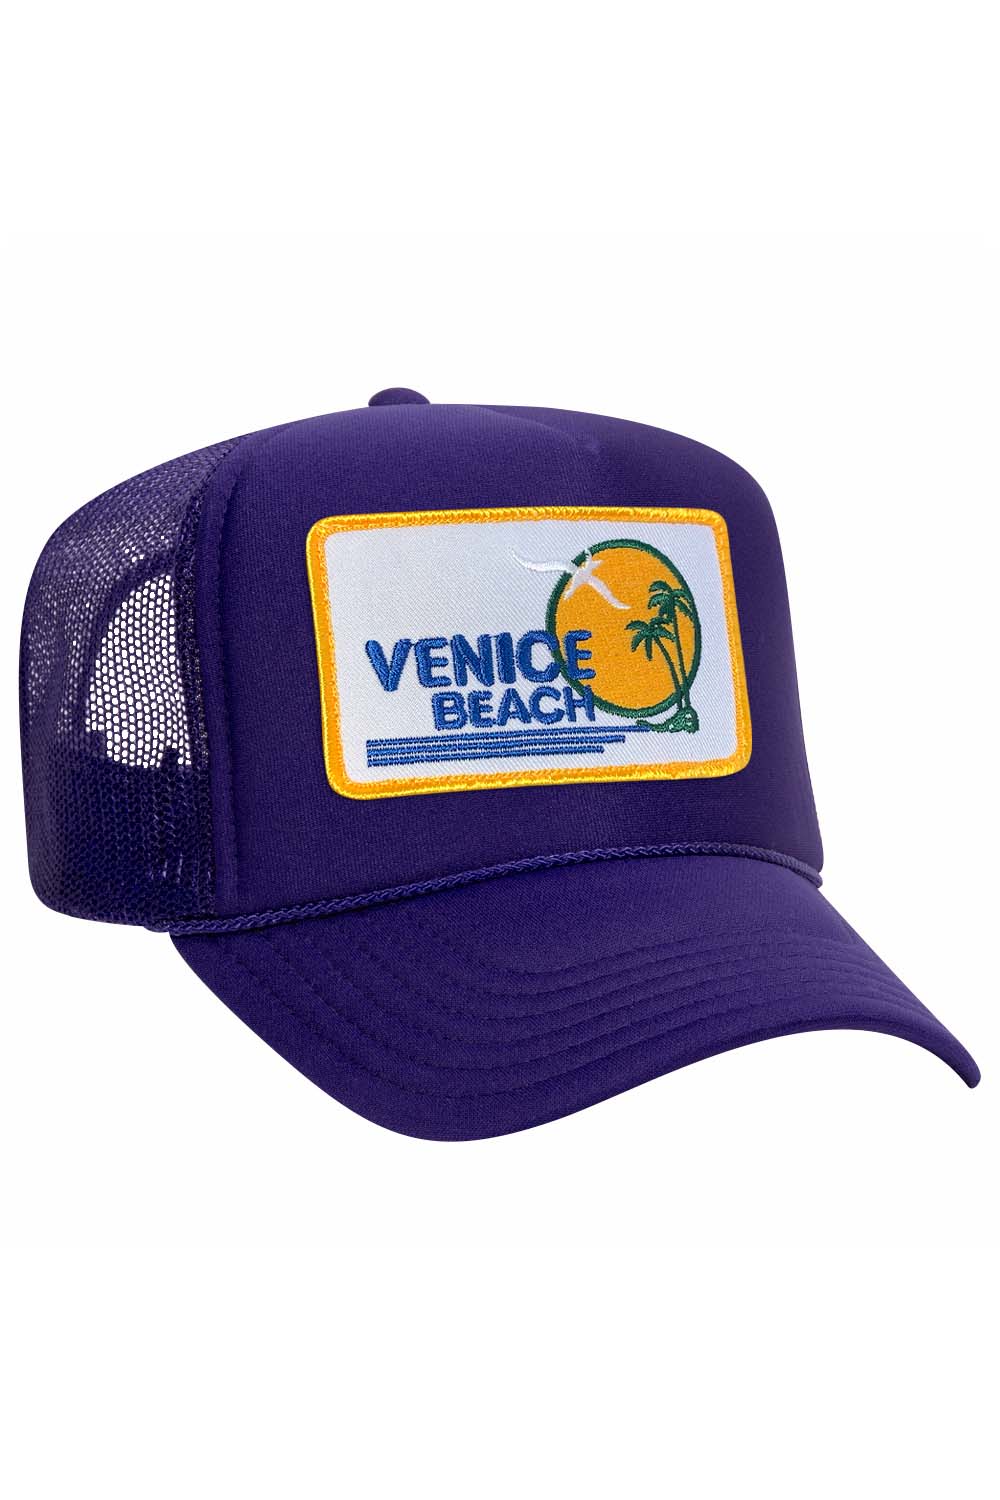 VENICE BEACH VINTAGE TRUCKER HAT HATS Aviator Nation OS PURPLE 